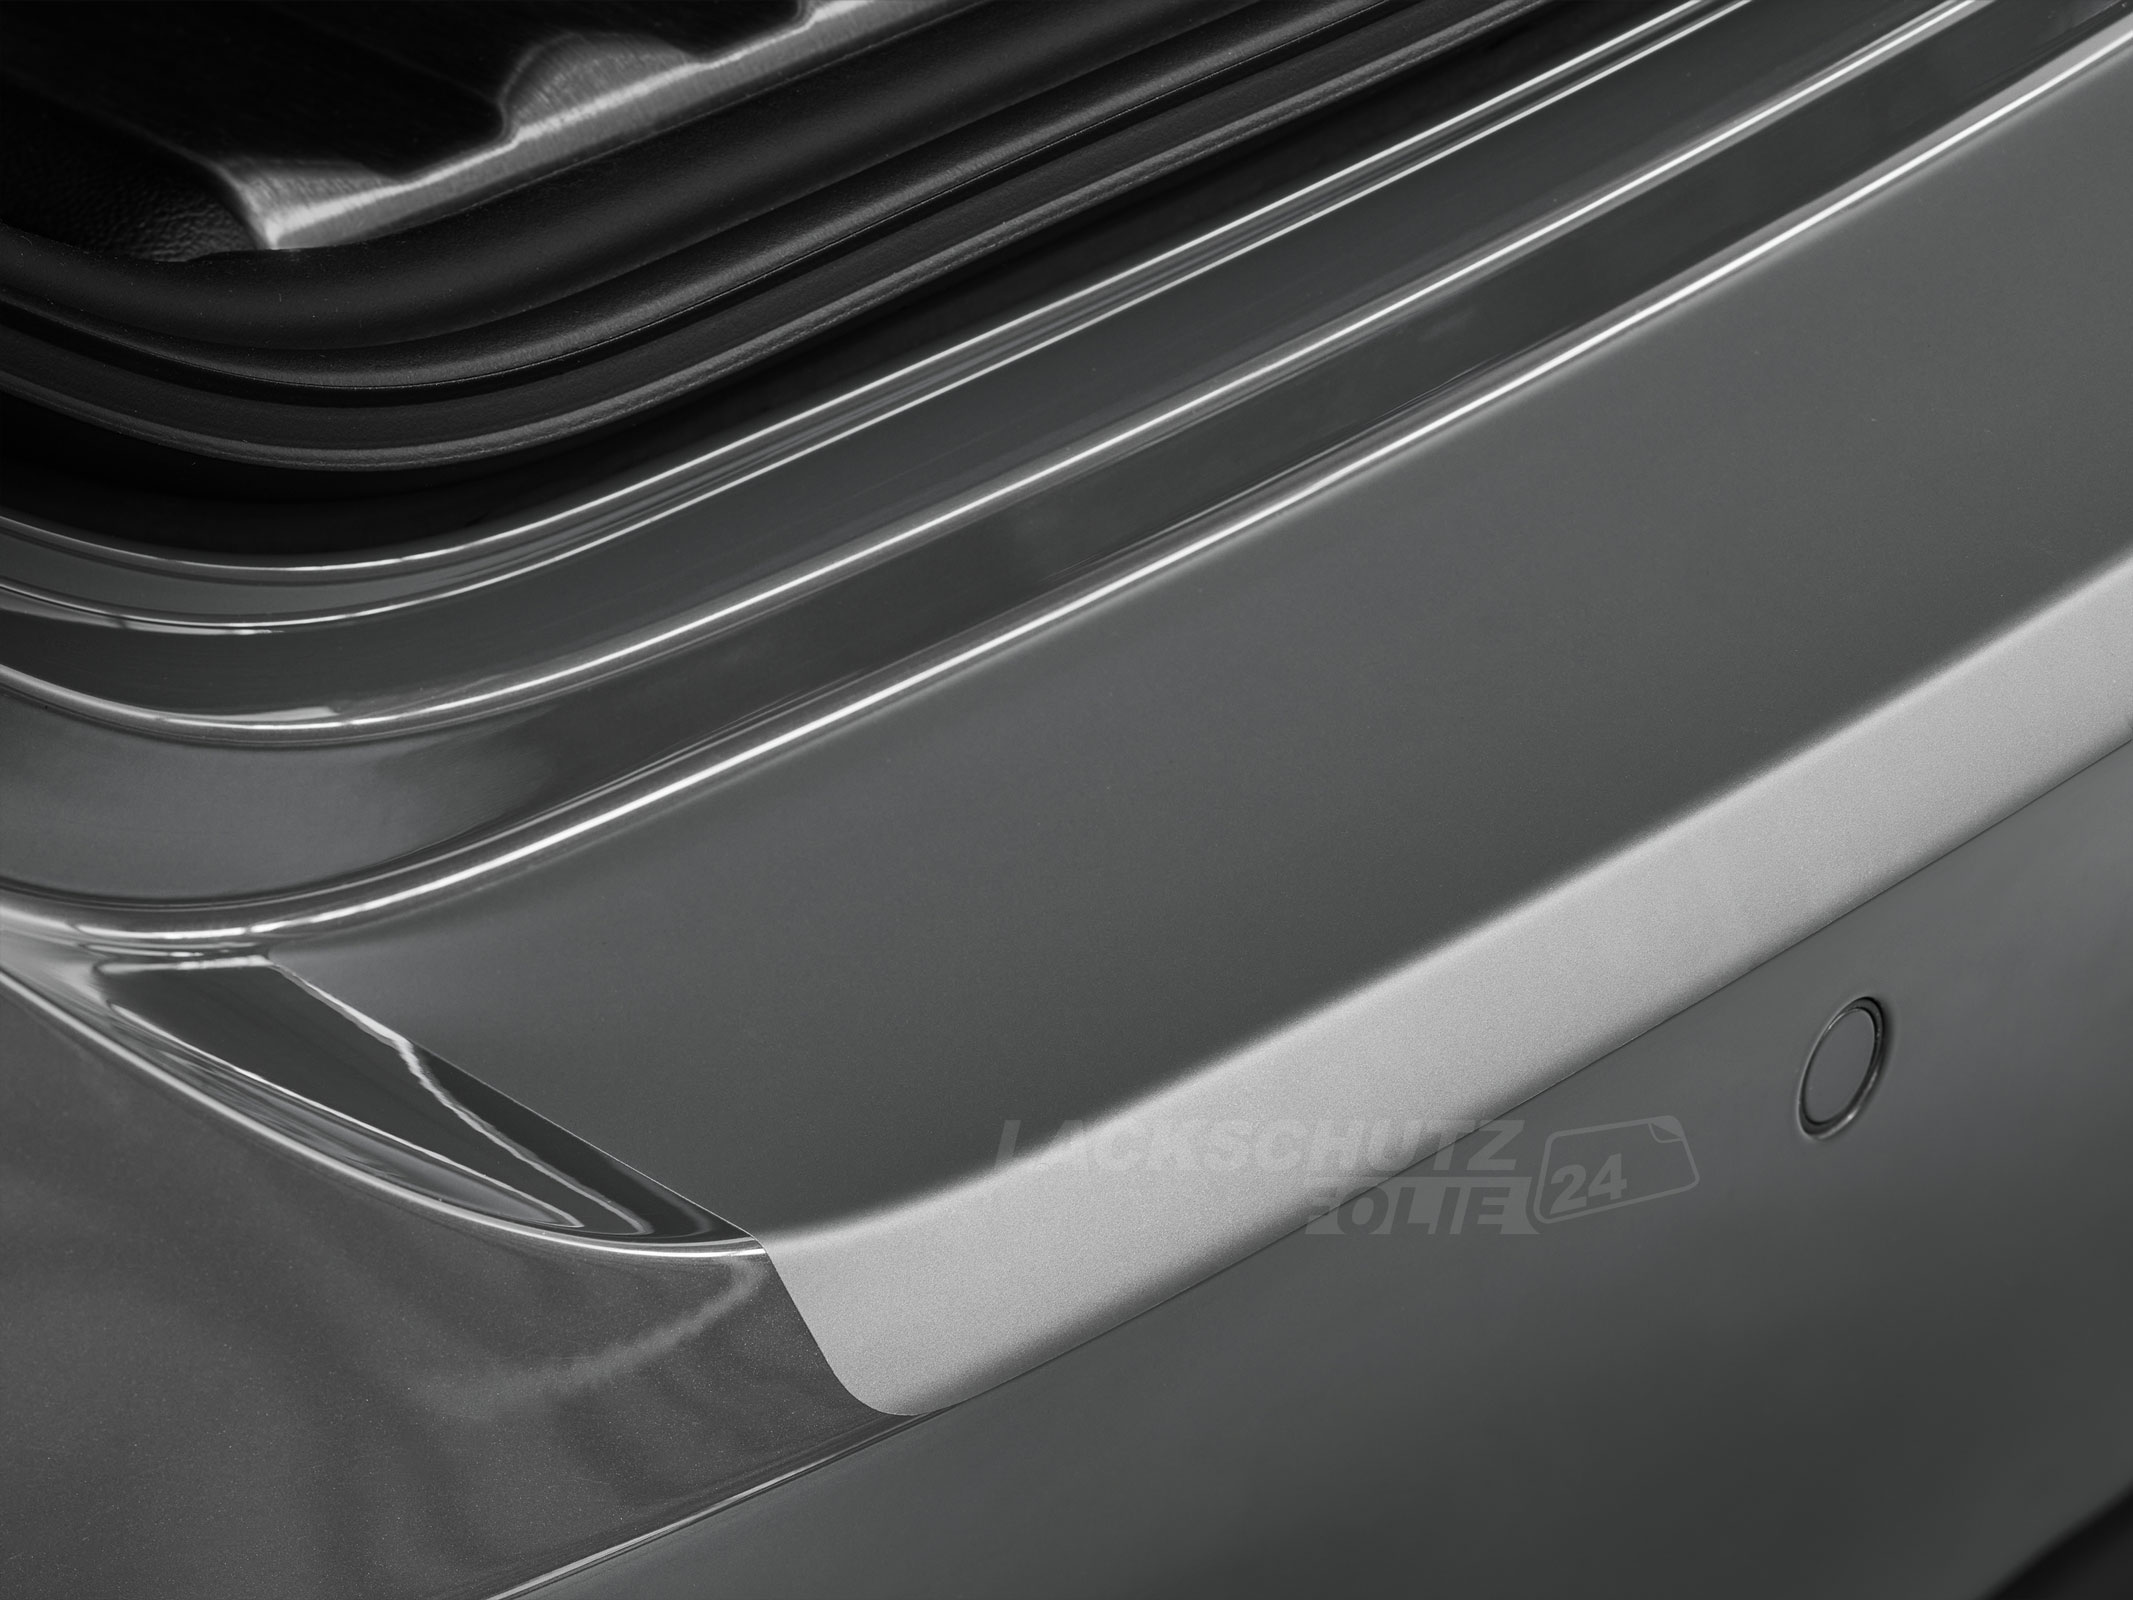 Ladekantenschutzfolie - Transparent Glatt MATT 110 µm stark  für Opel Vivaro  Typ A, BJ 2001-2014